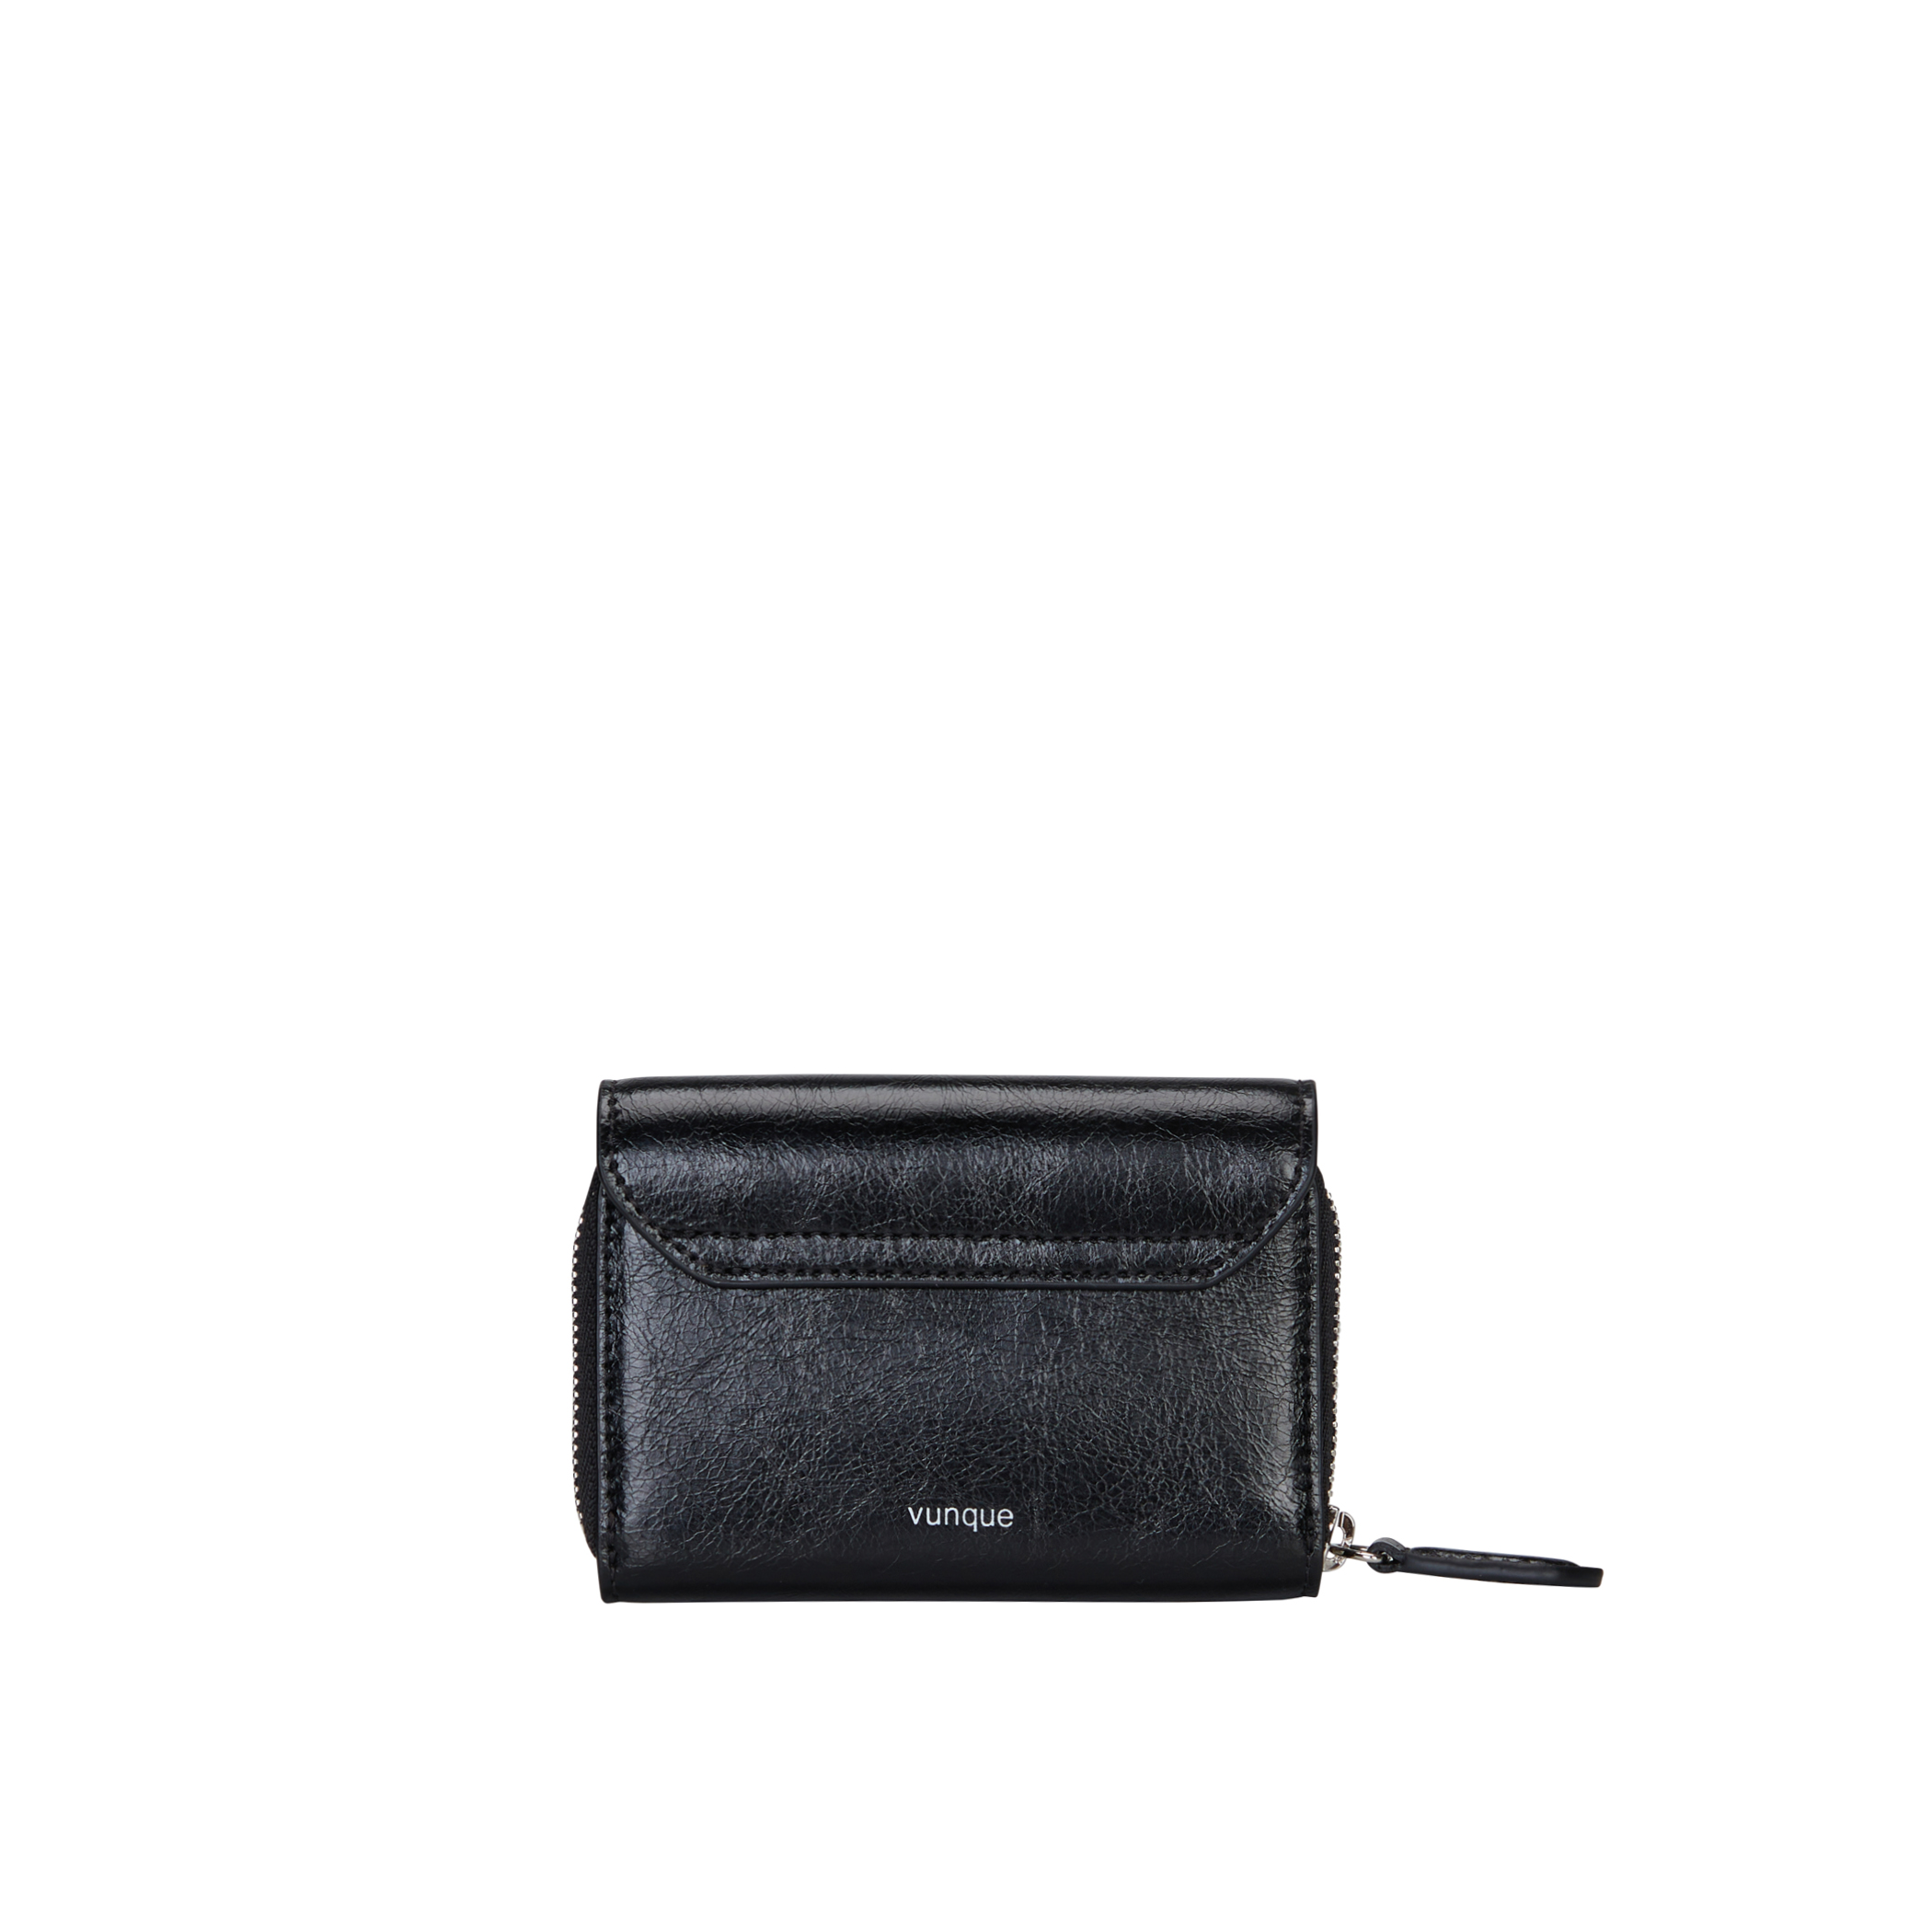 [RENEWAL] Perfec Essence Zipper Card Wallet (퍼펙 에센스 지퍼 카드지갑) Black